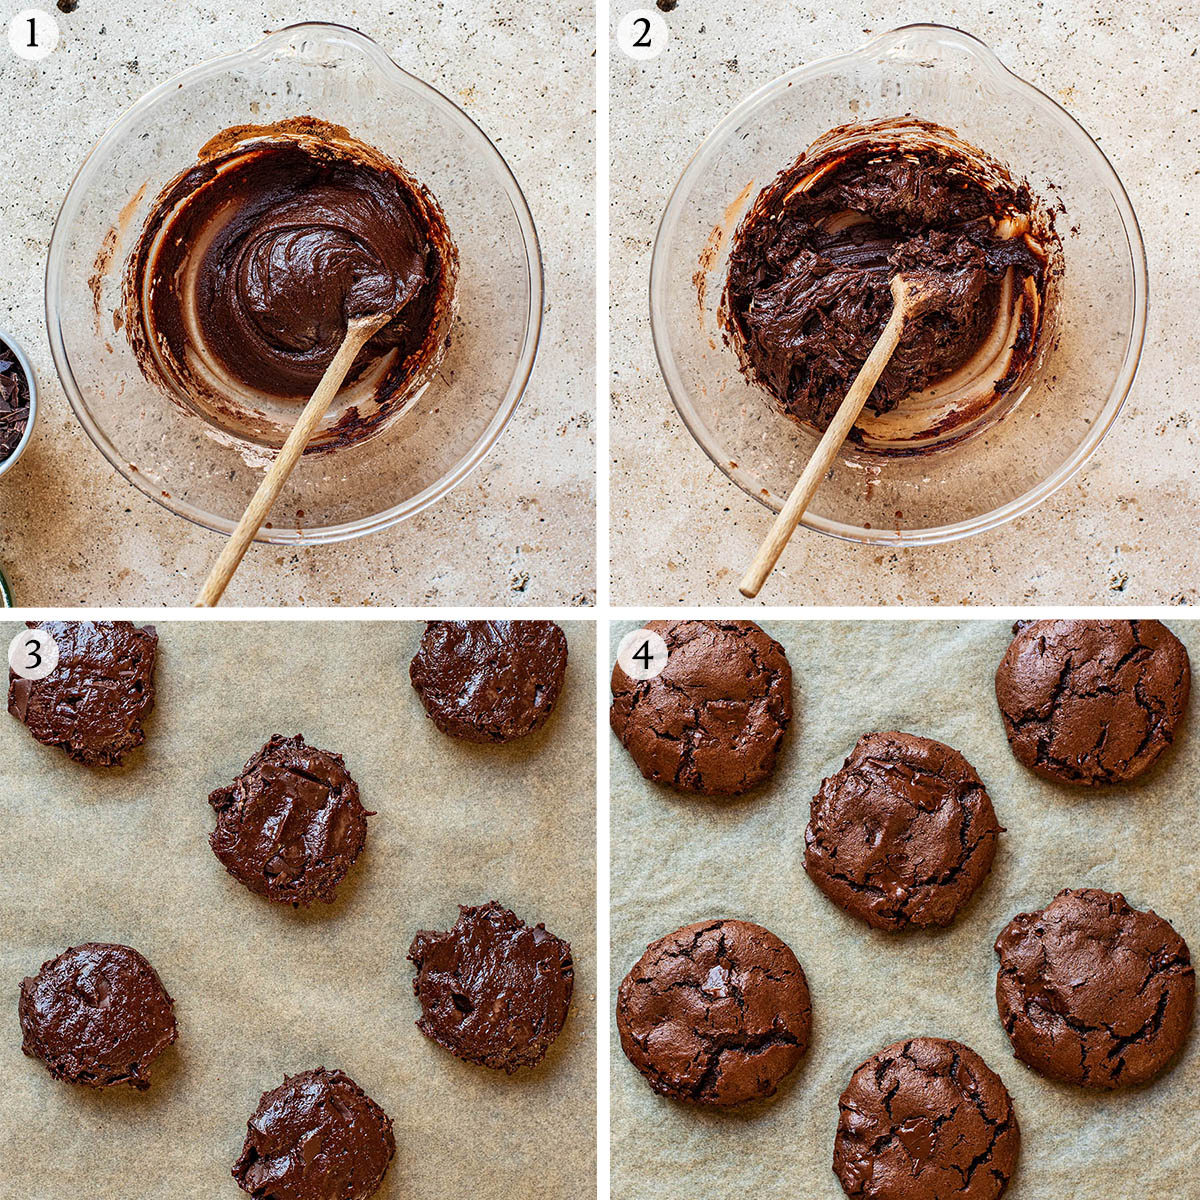 Flourless chocolate cookies steps 1 to 4.